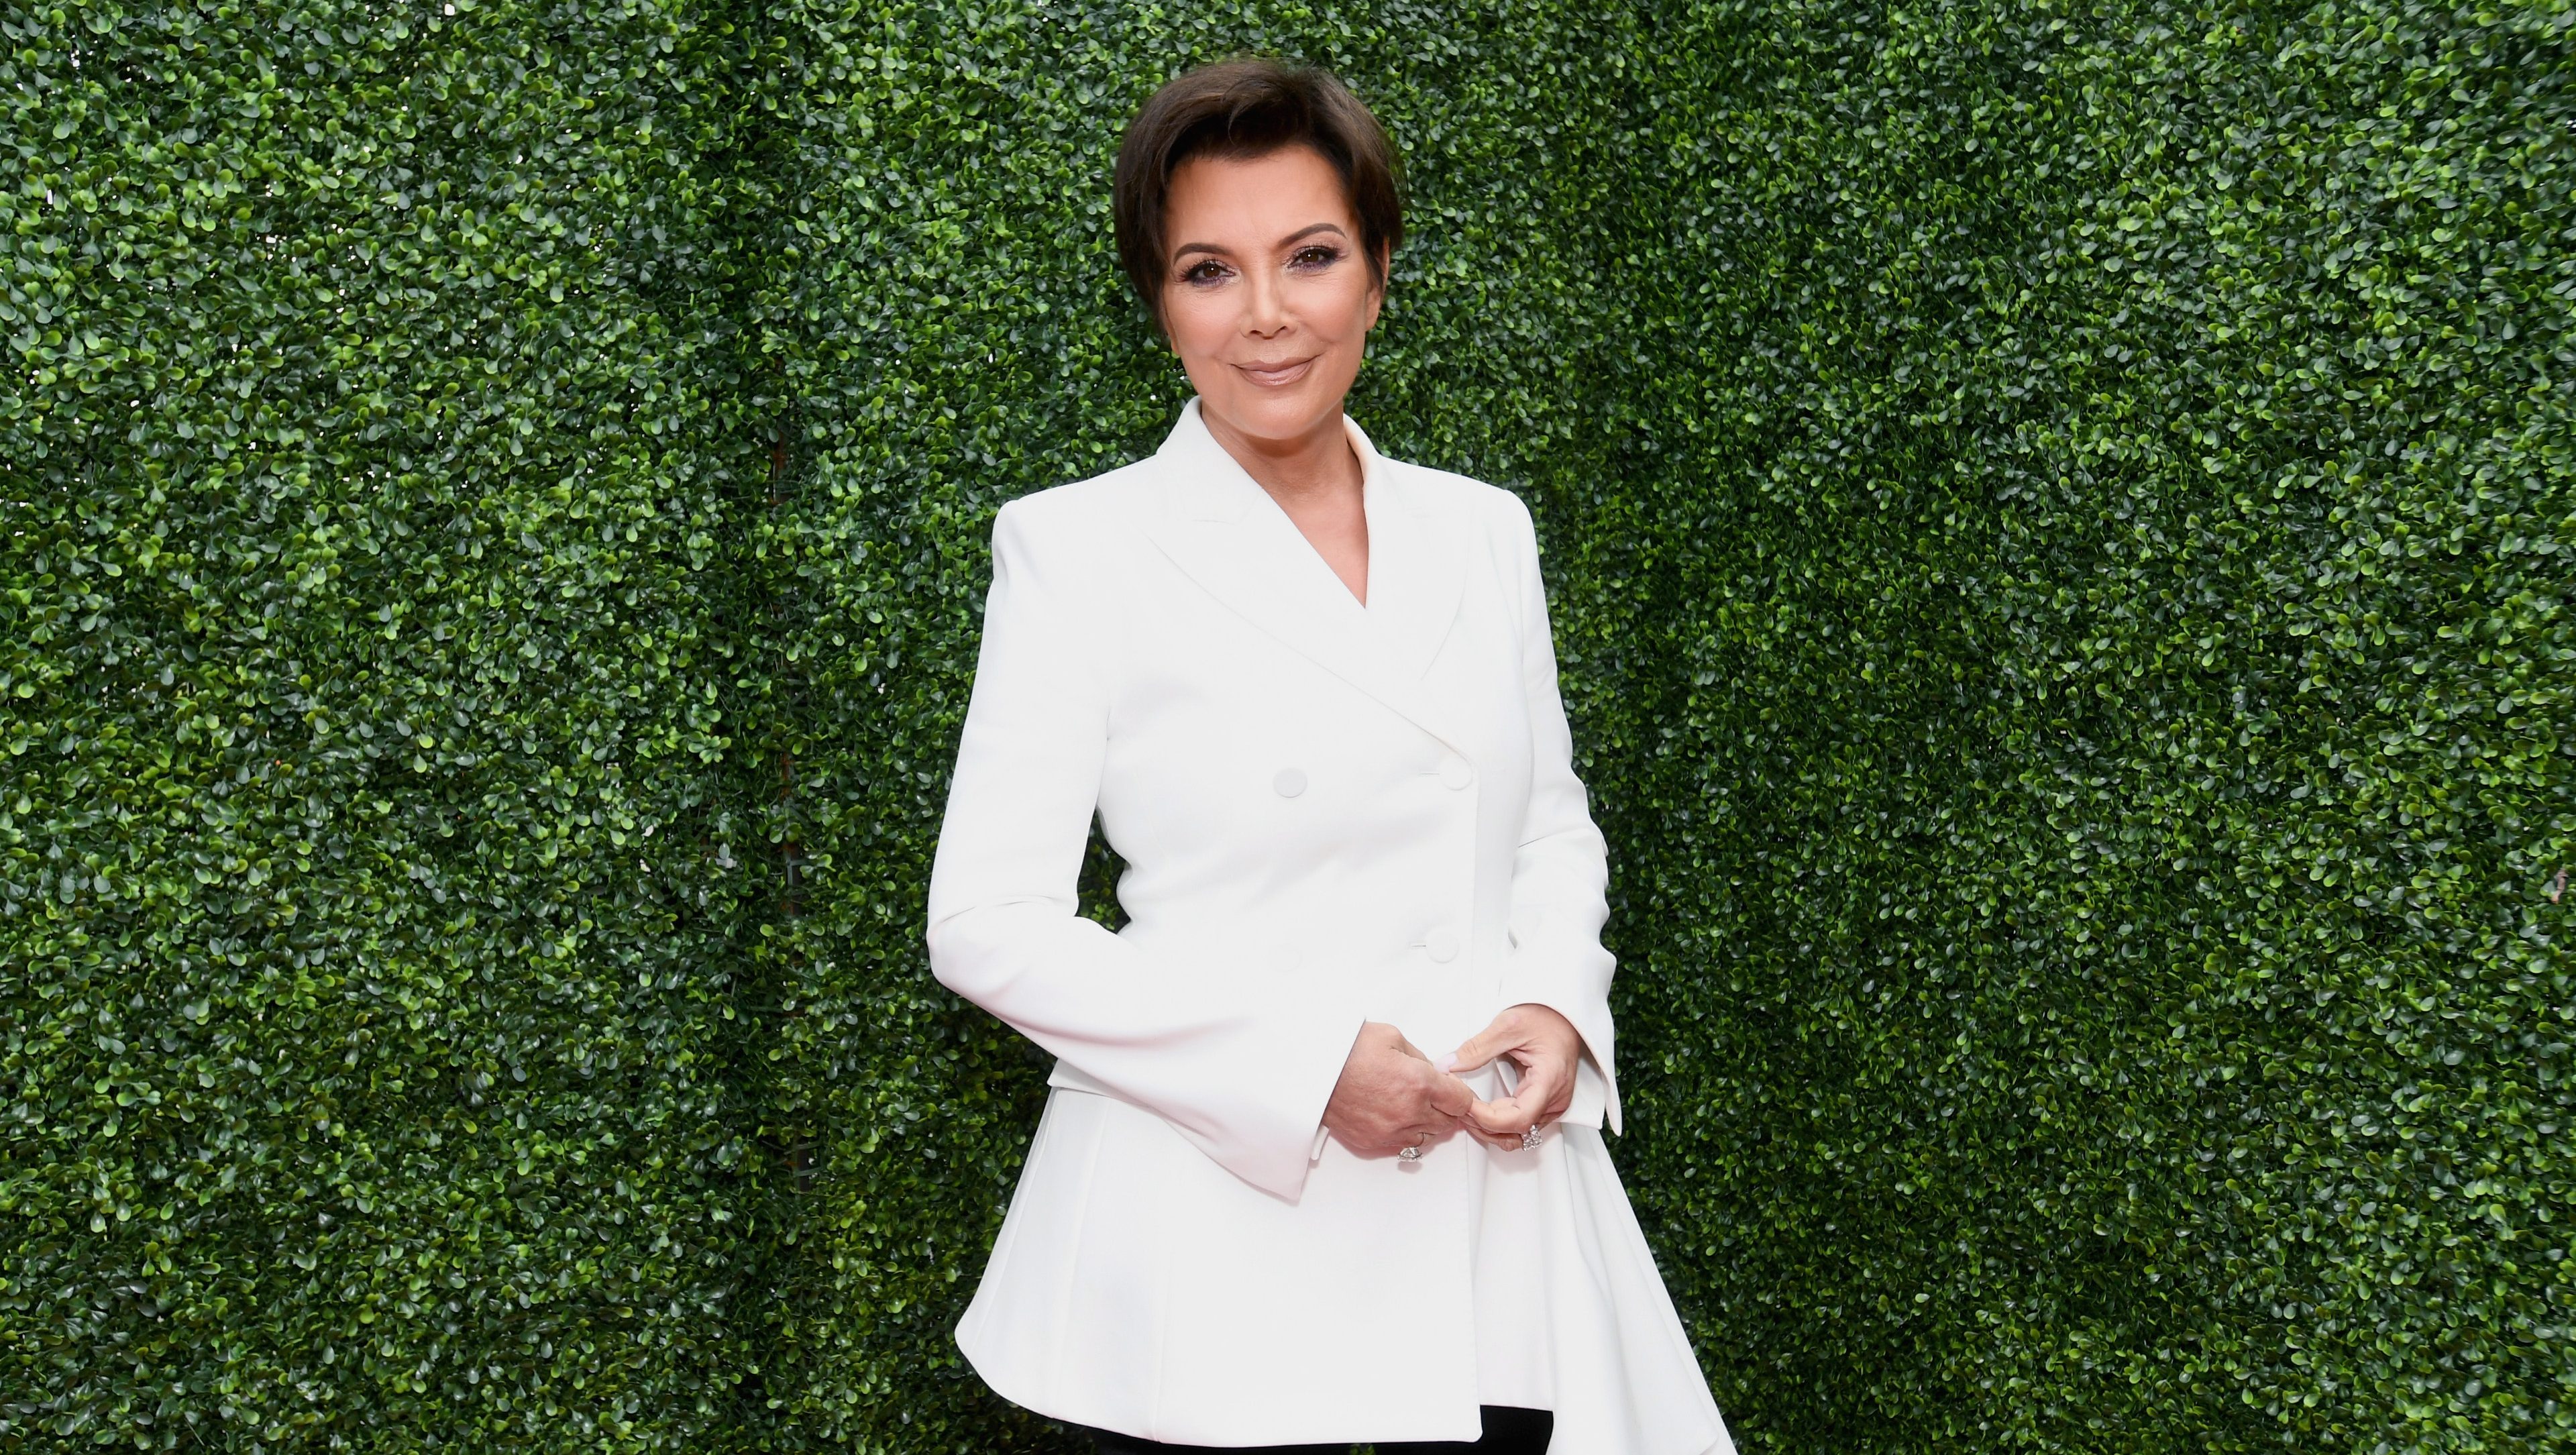 Kris Jenner And Kourtney Kardashian Sued For Sexual Harassment